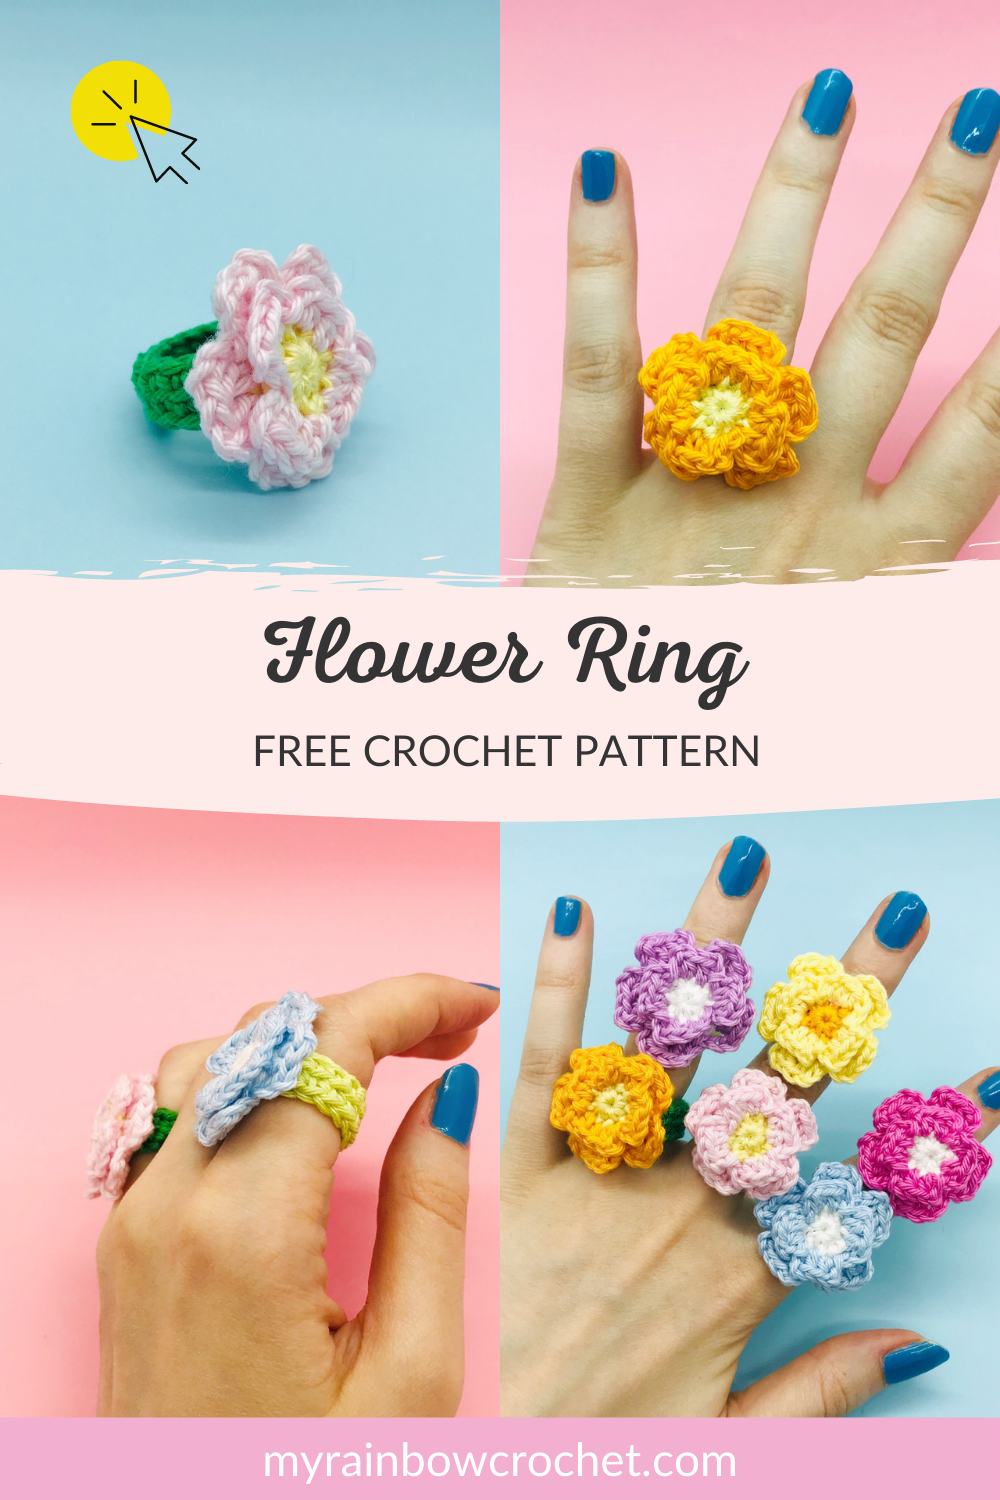 How to Make a Crochet Flower Ring / Tutorial - YouTube